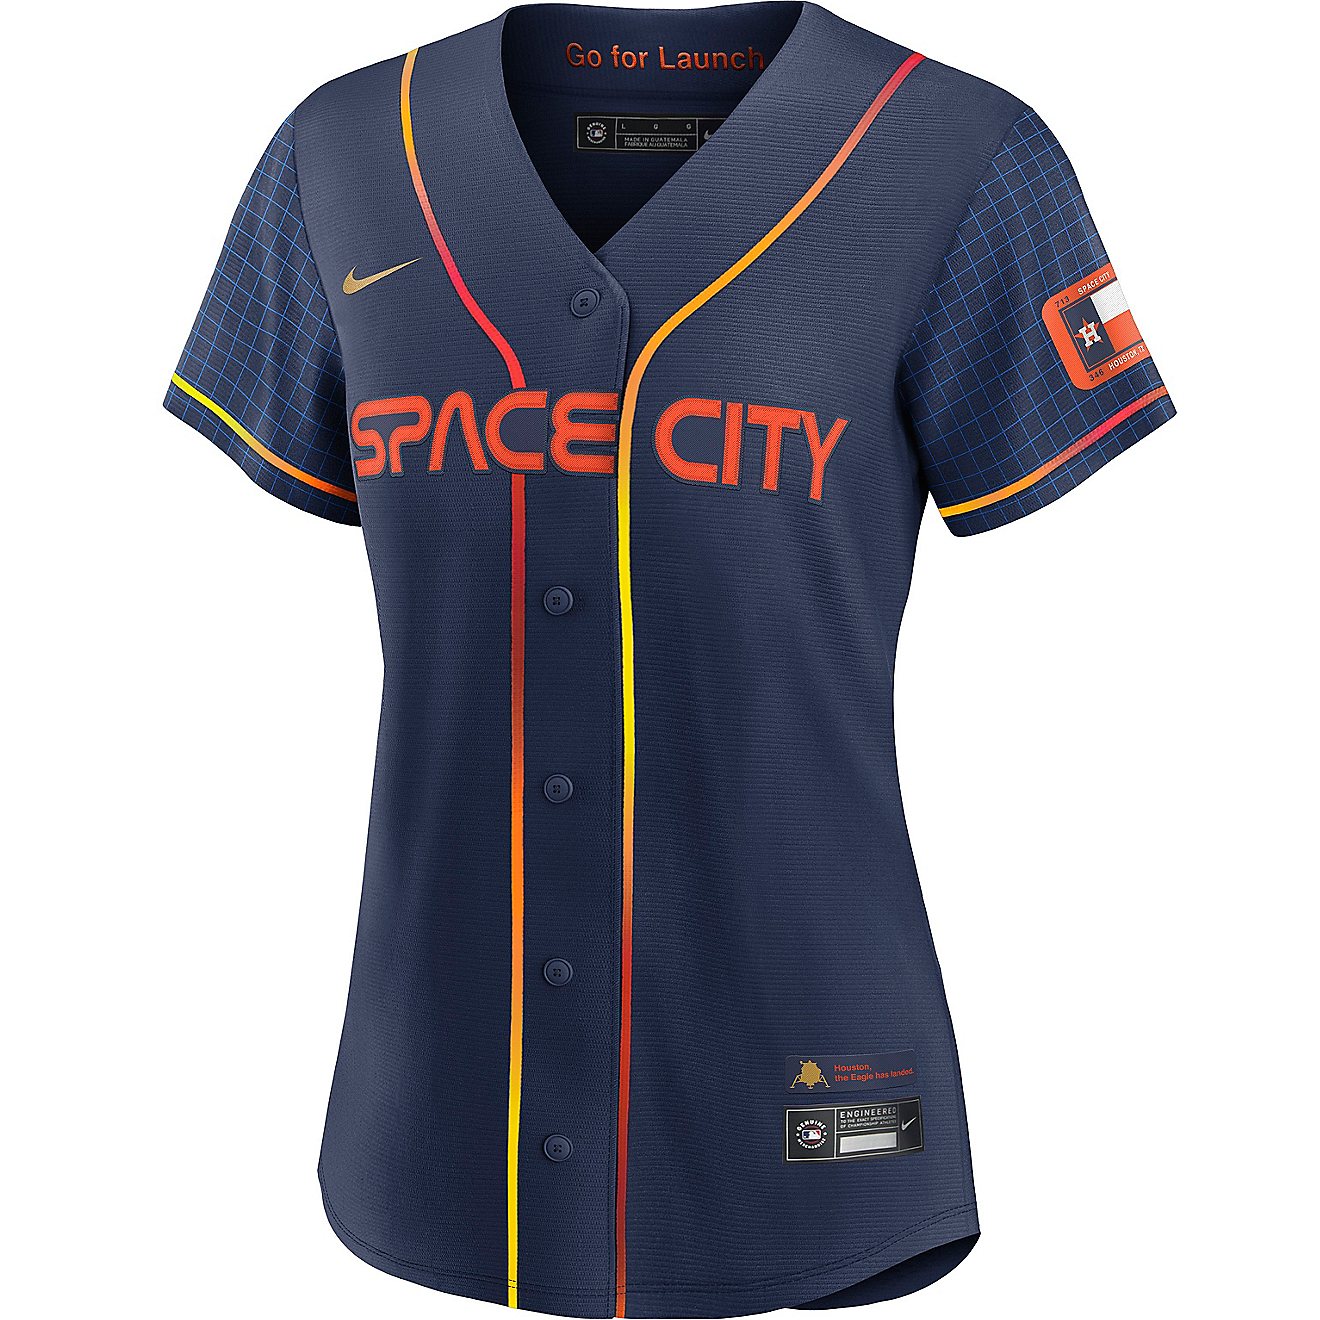 women's space city jersey